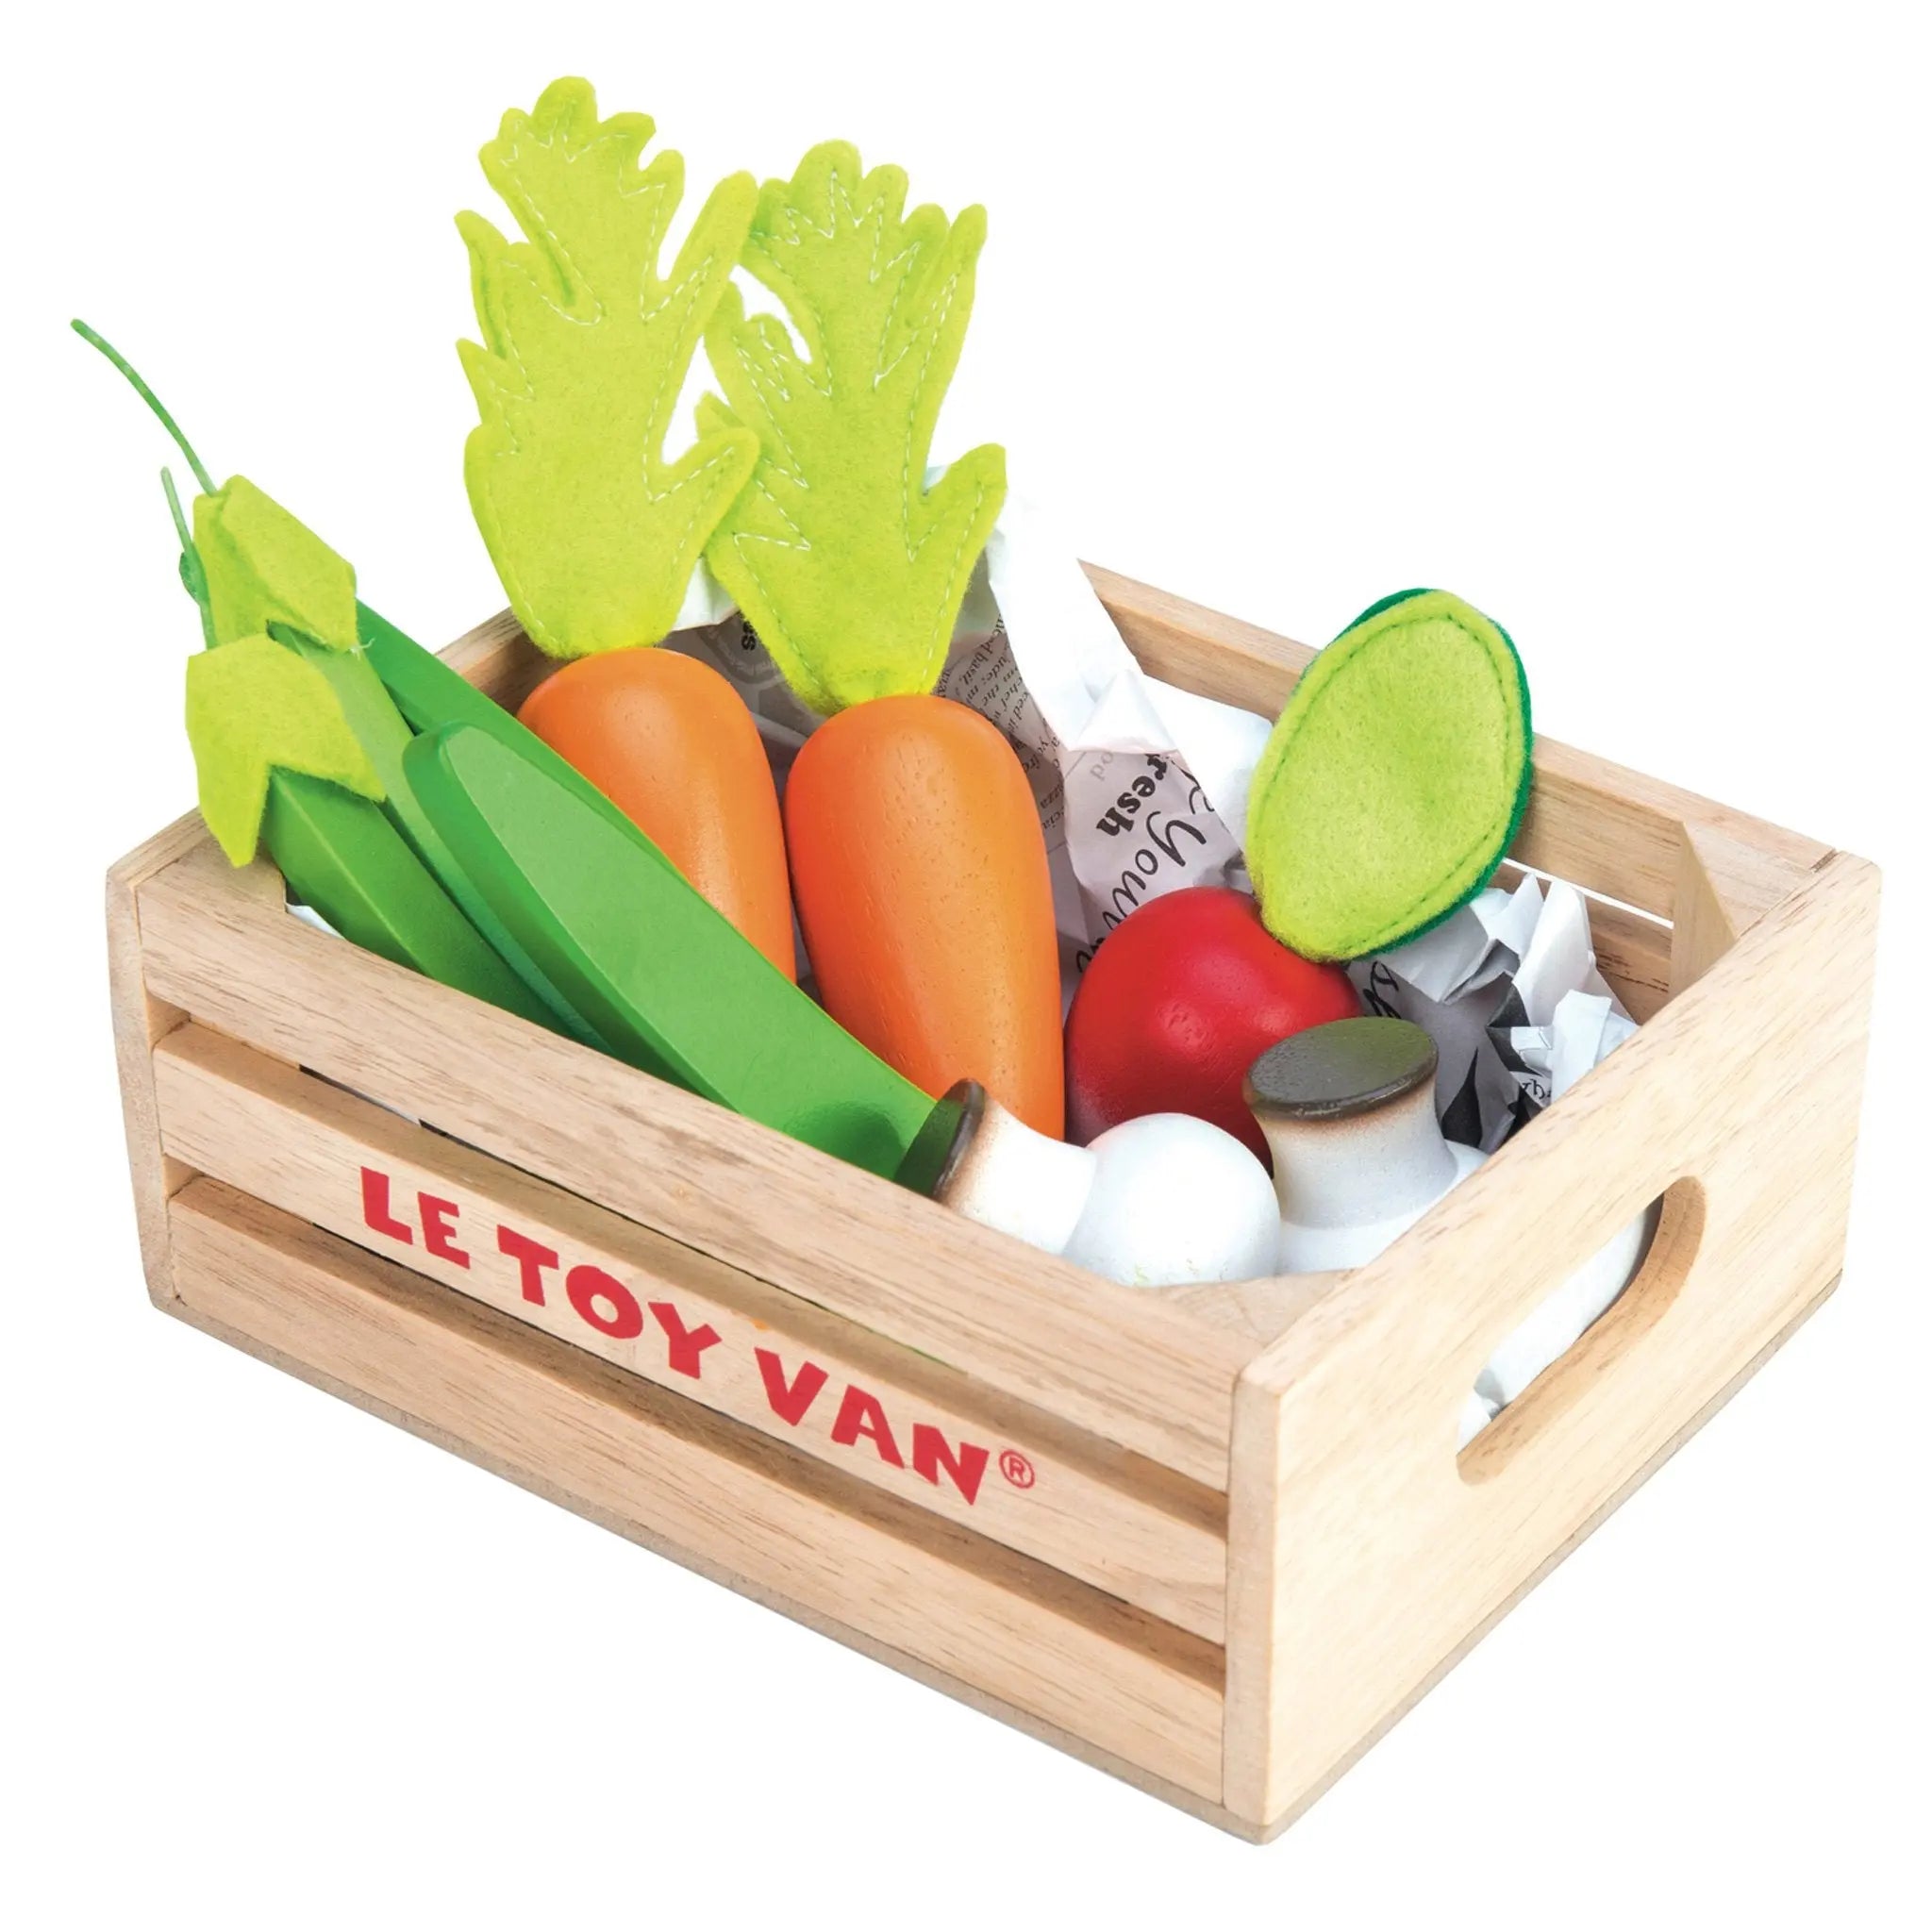 Vegetables '5 a Day' Crate-Wooden toys & more-Le Toy Van-Blue Almonds-London-South Kensington